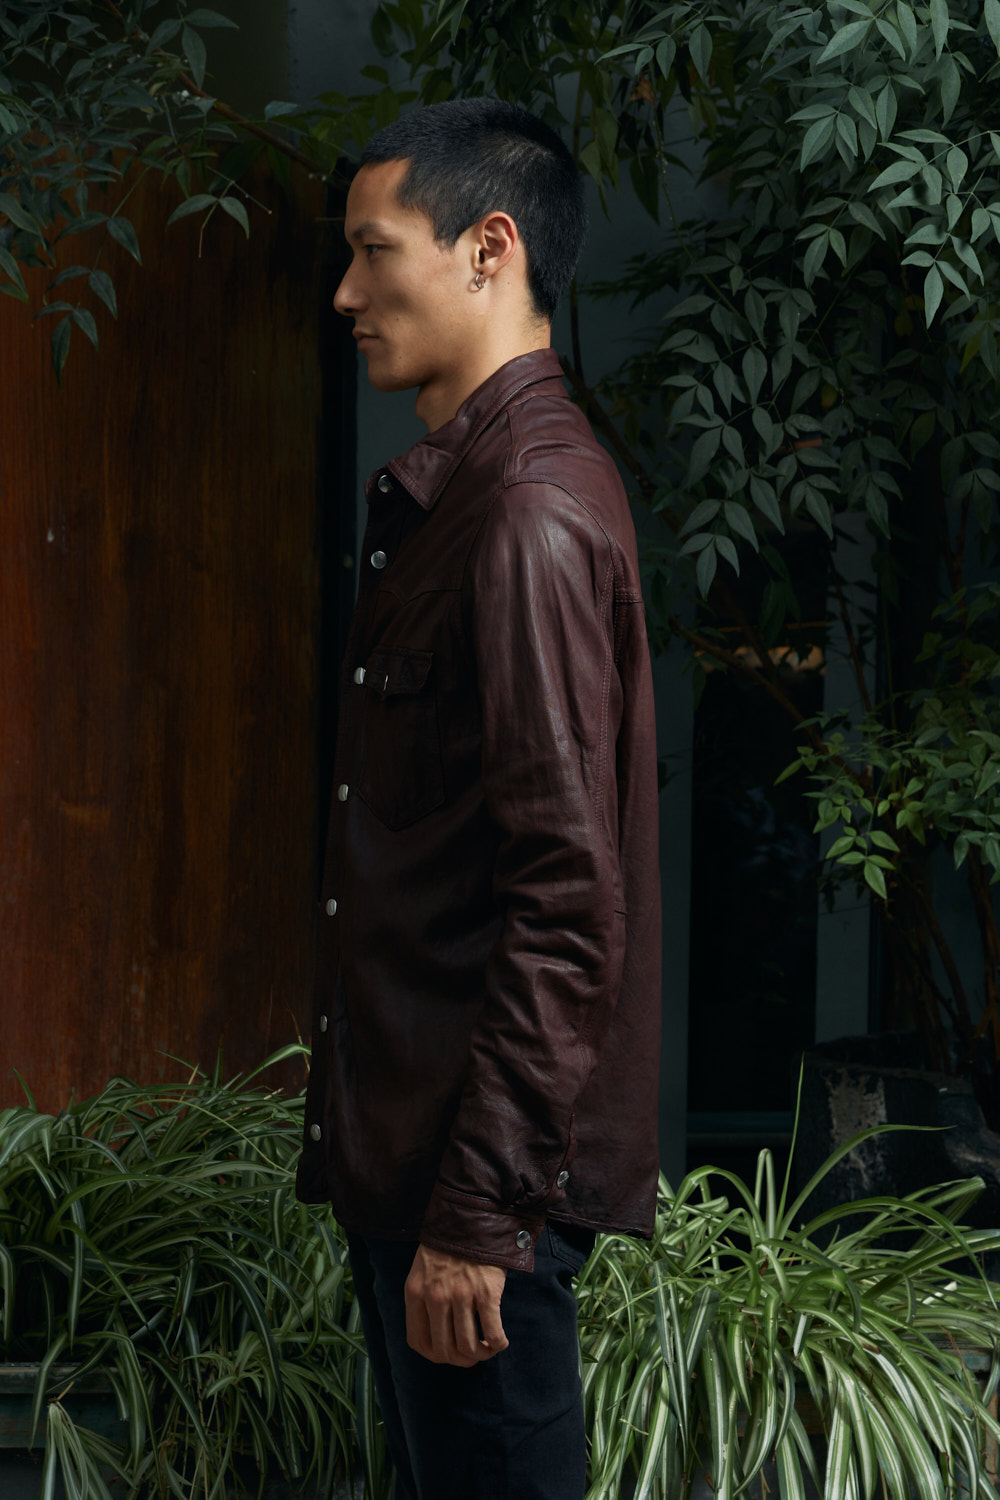 Giorgio Brato | Leather Shirt